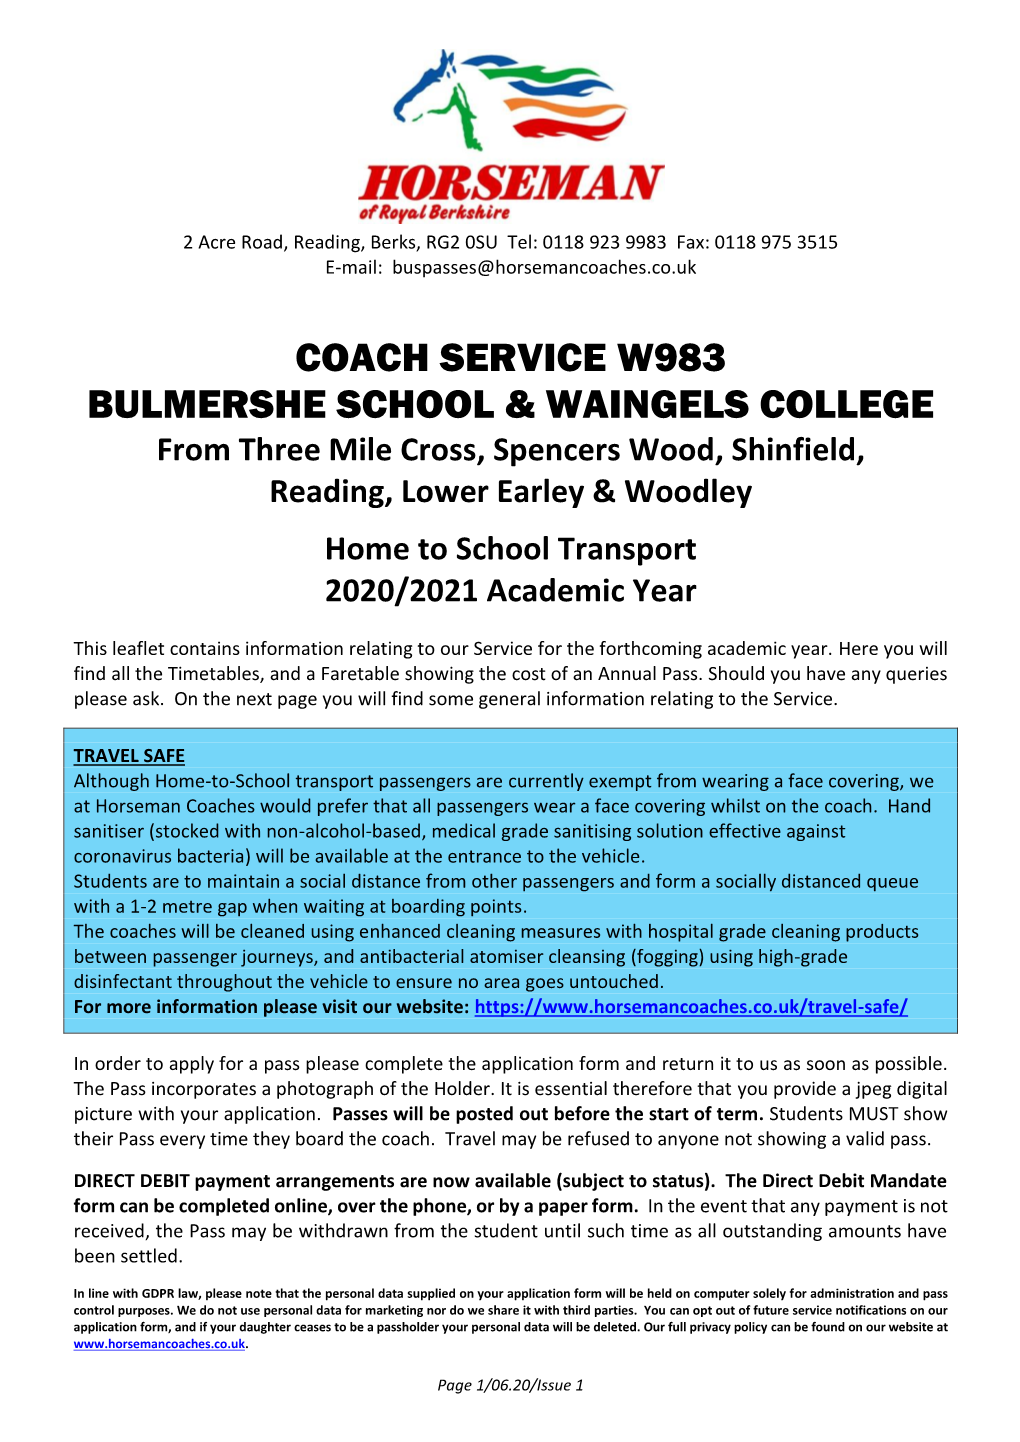 Coach Service W983 Bulmershe School & Waingels College